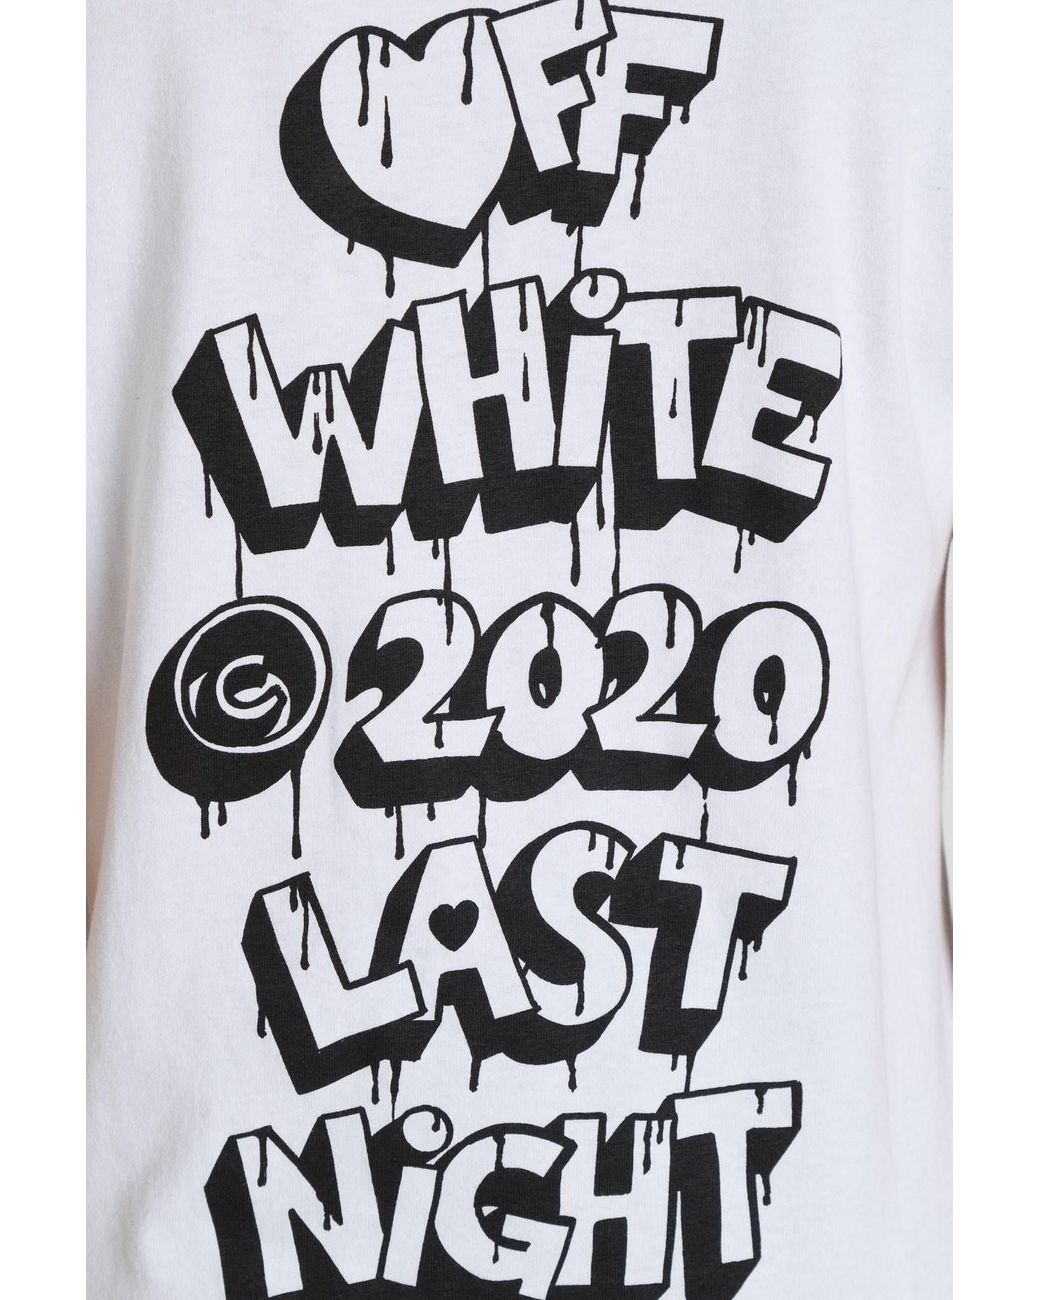 Off-White c/o Virgil Abloh 2020 Last Night Tee in White | Lyst